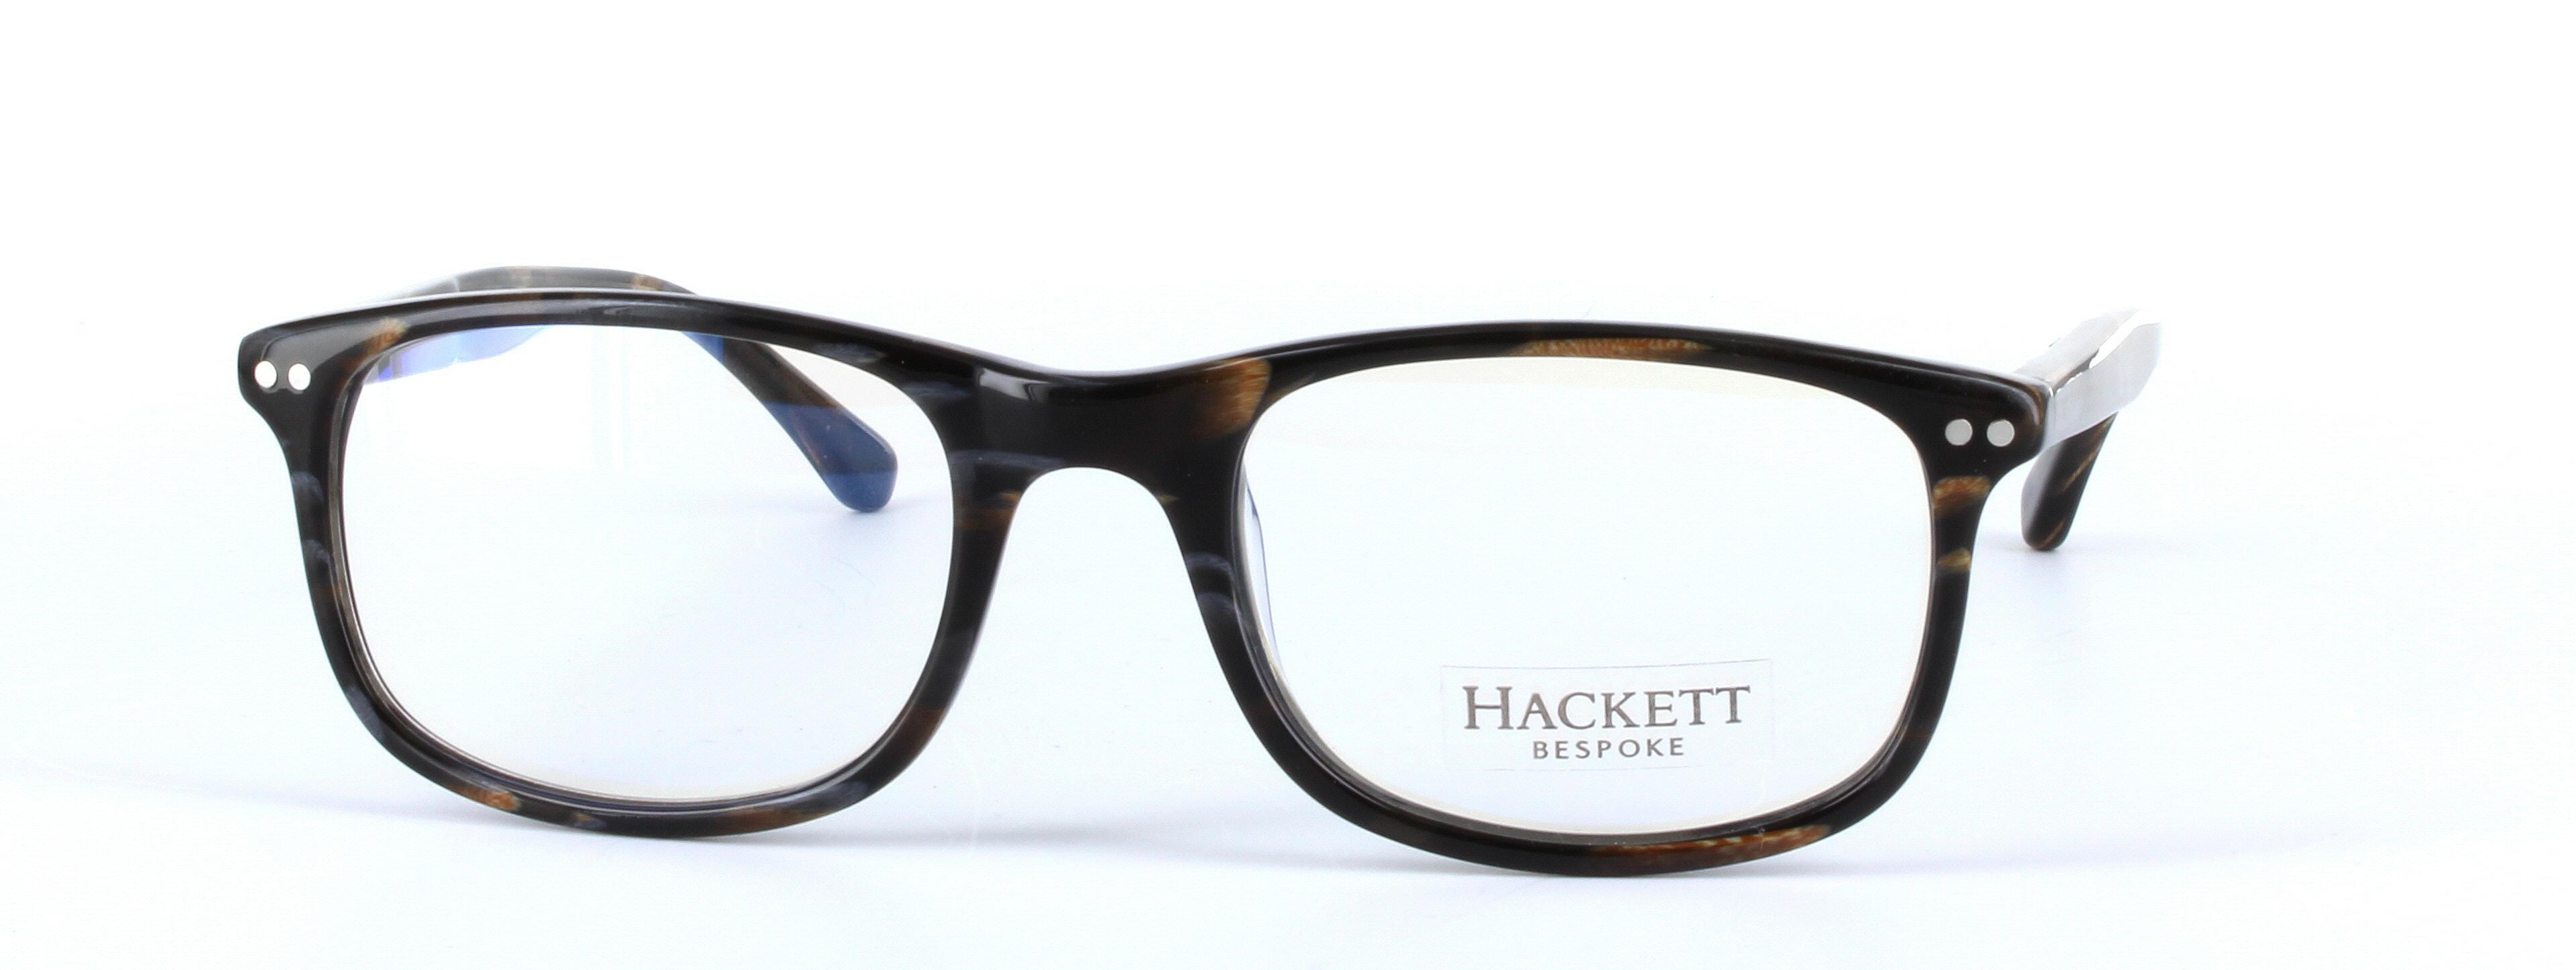 HACKETT BESPOKE (HEB123-936) Black Full Rim Oval Square Acetate Glasses - Image View 5